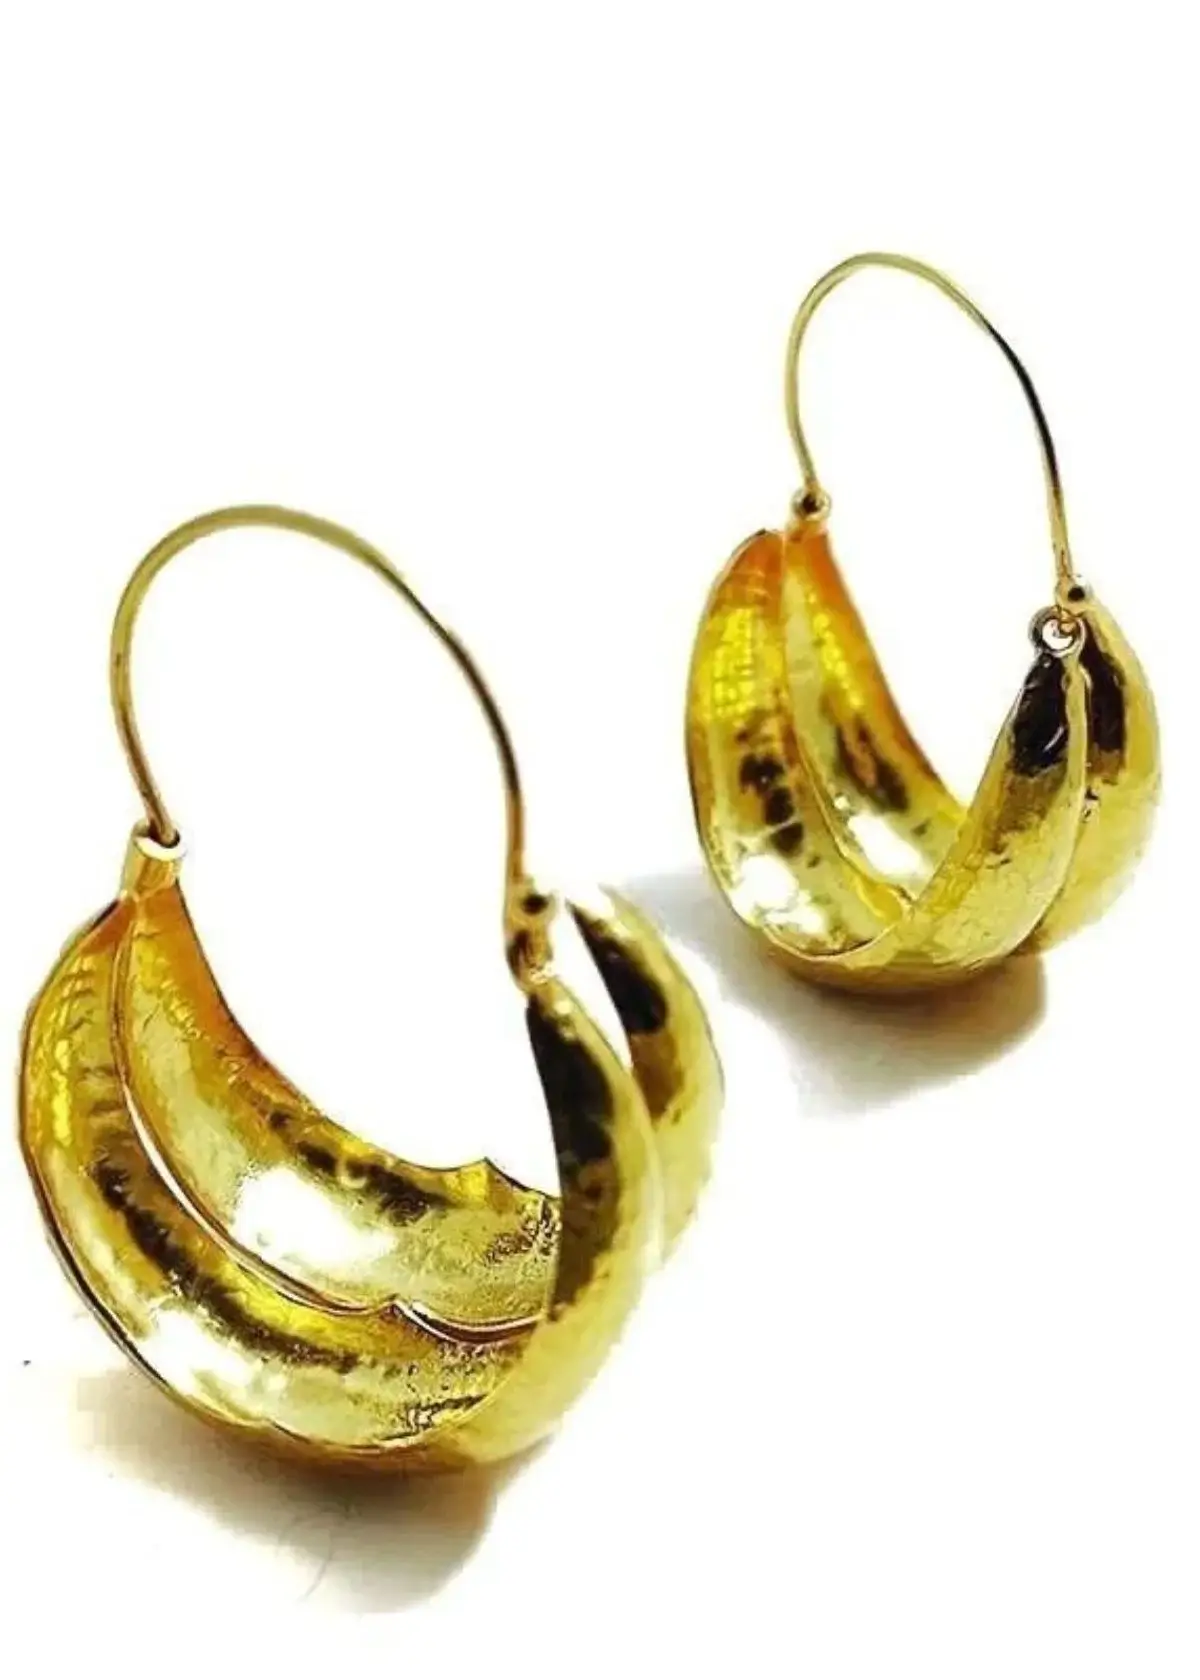 What is the Origin of Fulani Earrings?